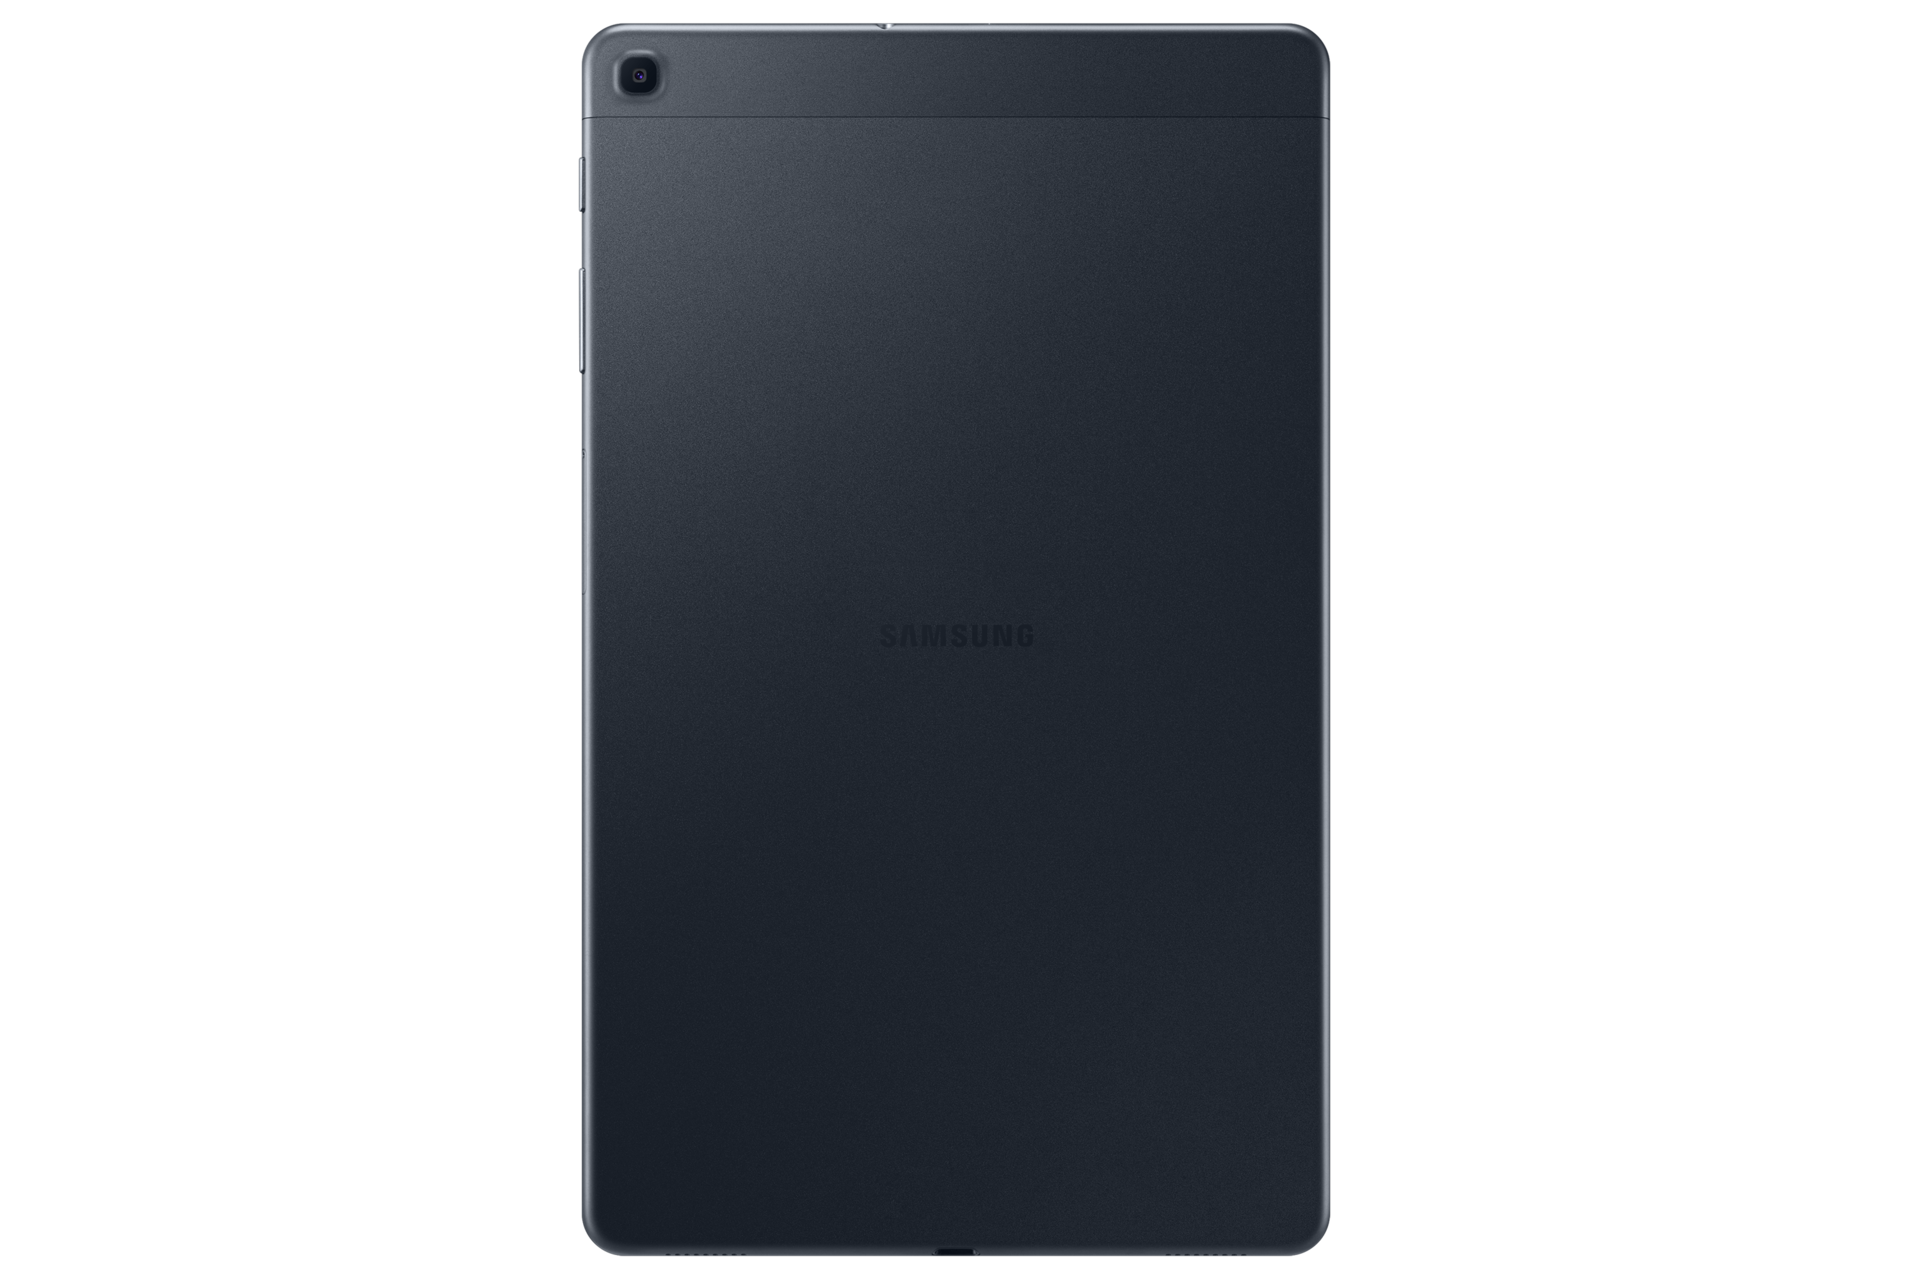 Soporte Tablet Pared Samsung Galaxy Tab A 10.1 T510